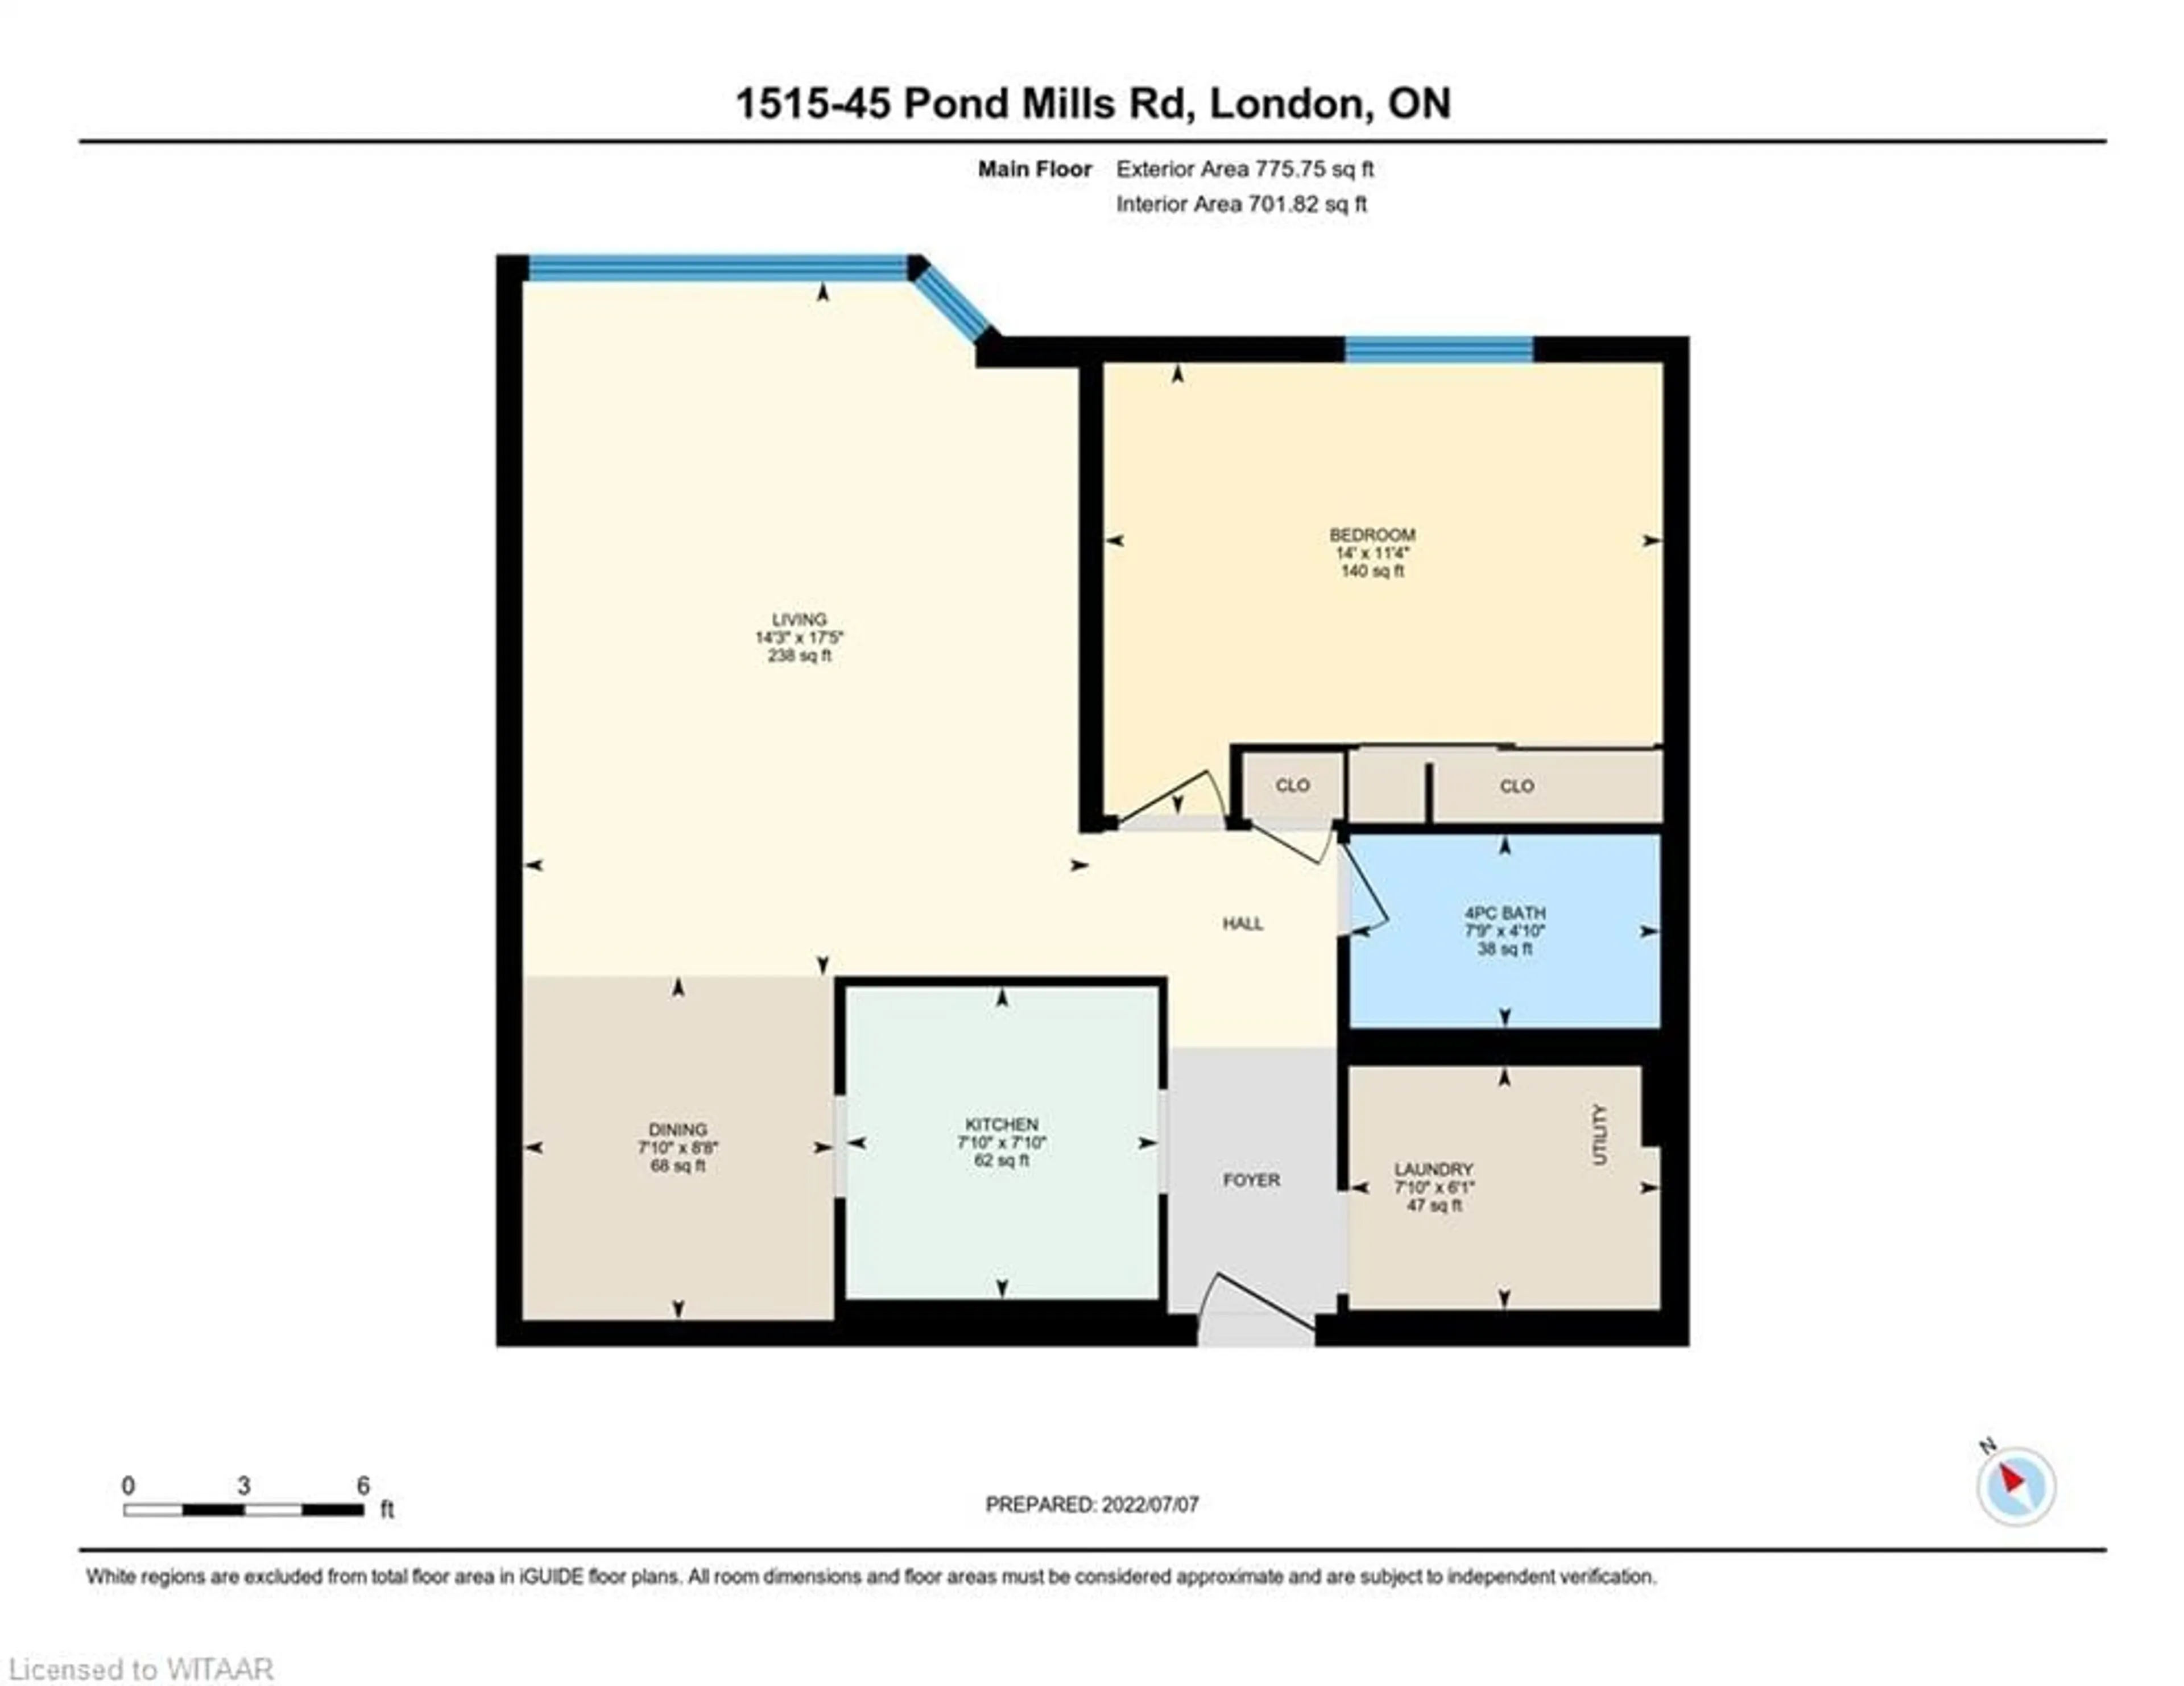 Floor plan for 45 Pond Mills Rd #1515, London Ontario N5Z 4W5